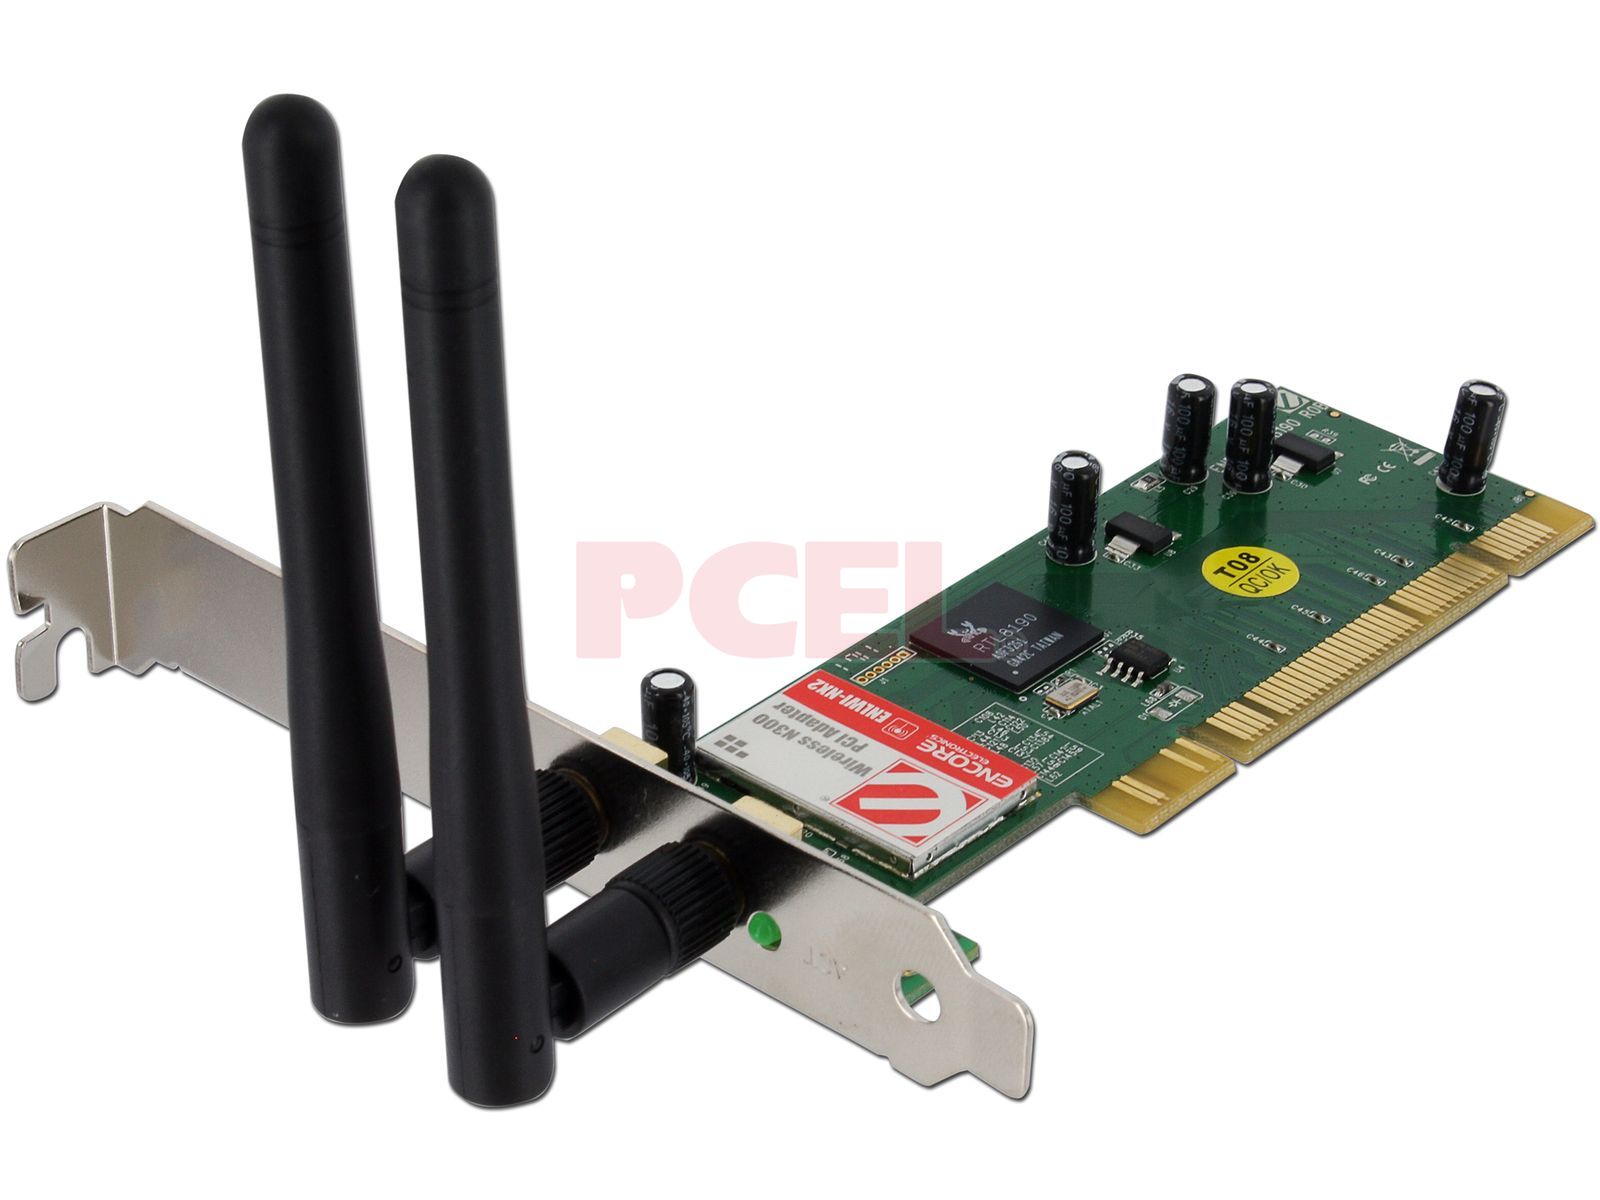  MZHOU Adaptador de tarjeta de red inalámbrica M.2 NGFF a PCI-E  1X convertidor de tarjeta de red WiFi, adaptador pasivo de tarjeta PCI-E  M.2/NGFF con antena de doble banda 2.4/5G, para